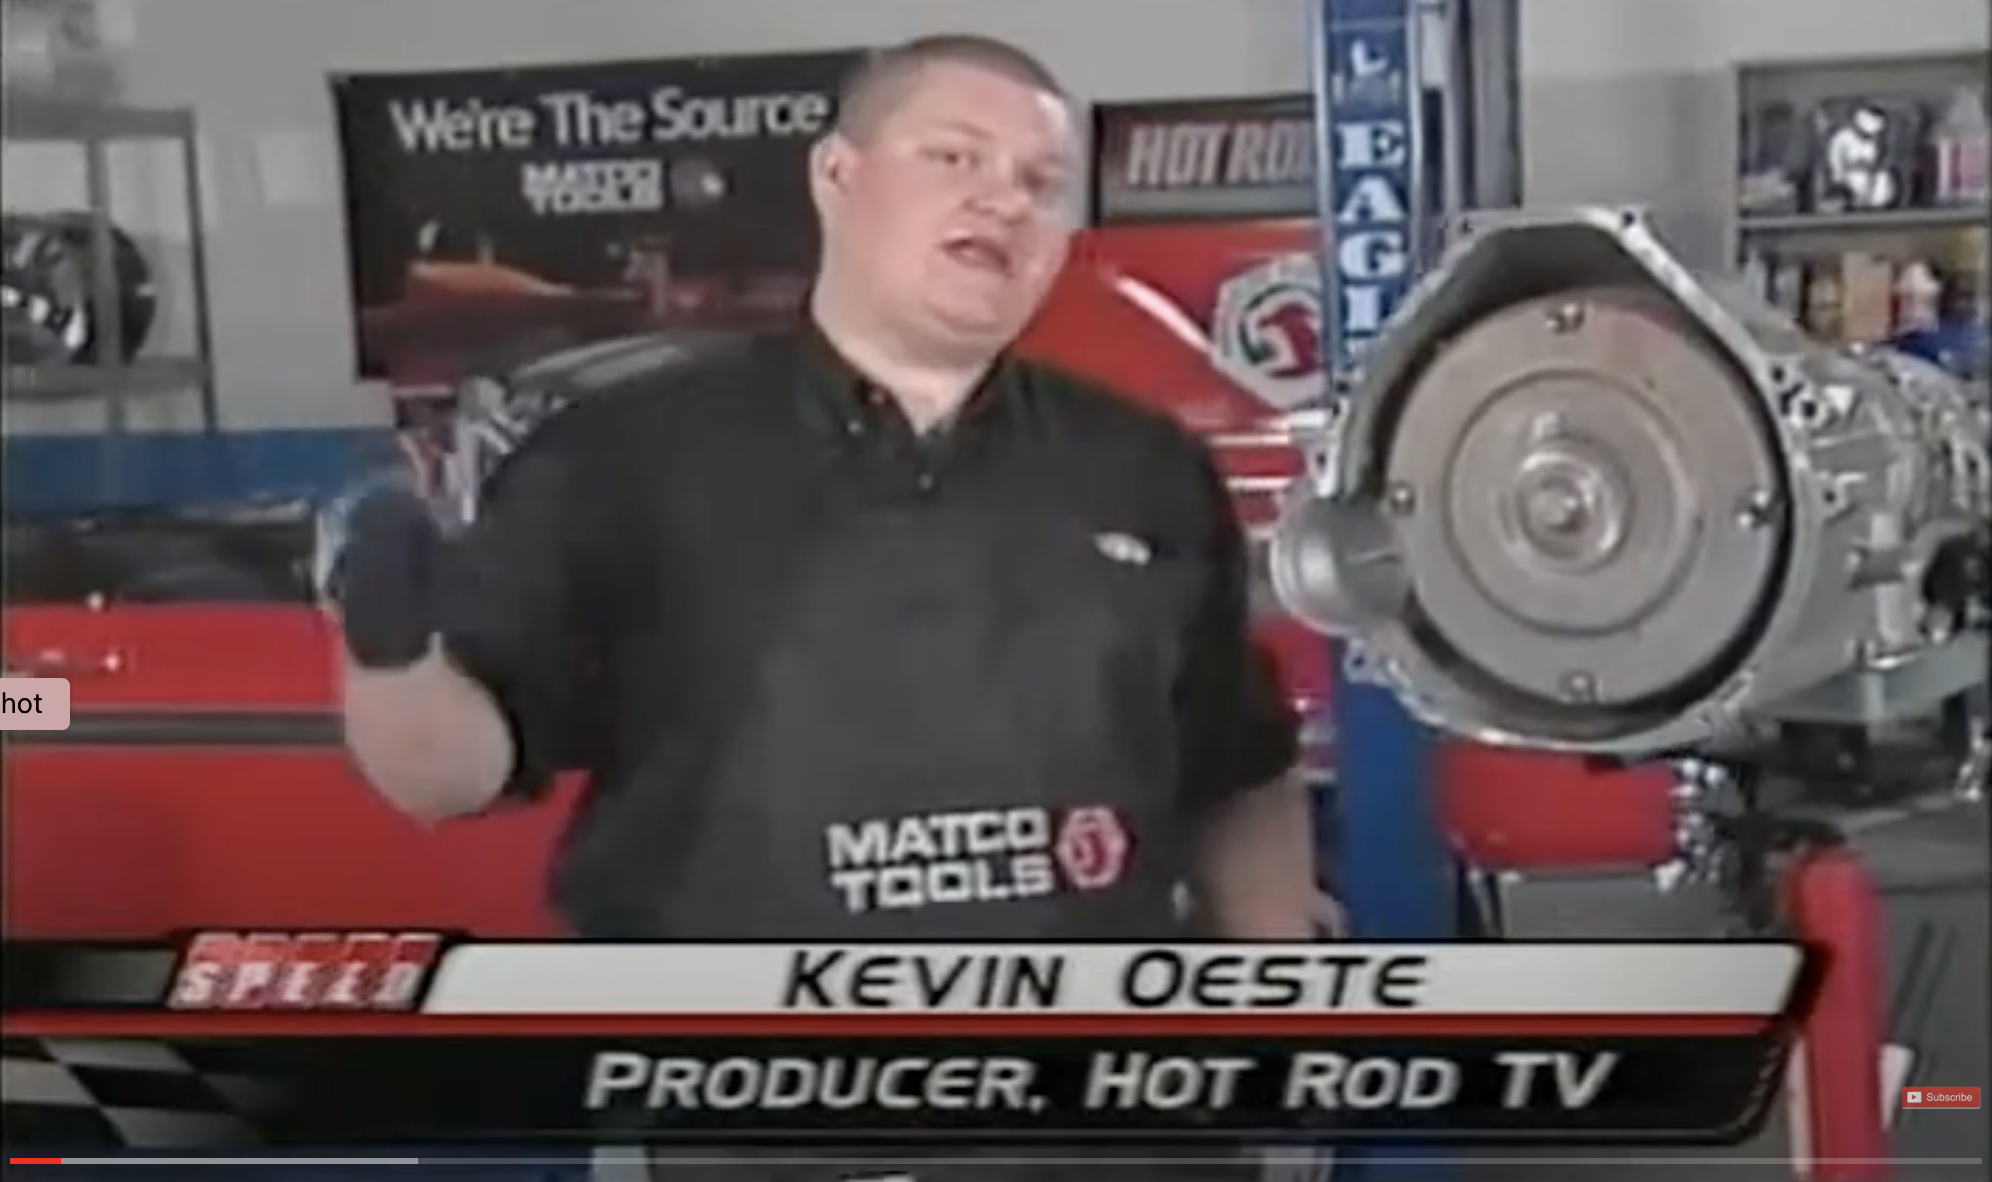 Kevin Oeste Hot Rod Magazine TV Producer